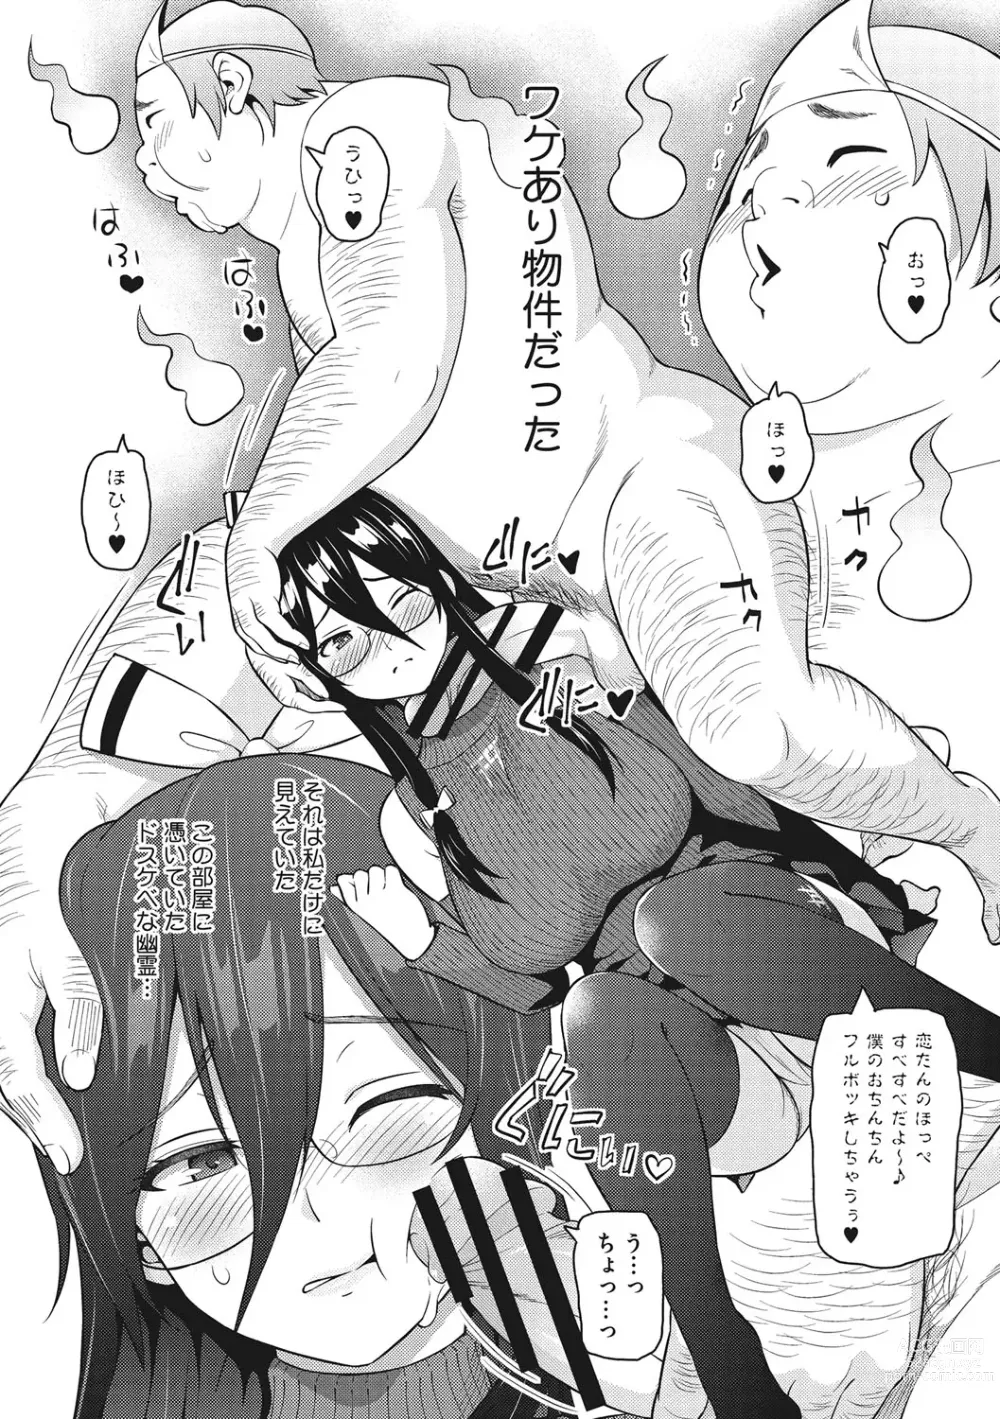 Page 5 of manga Risky Play